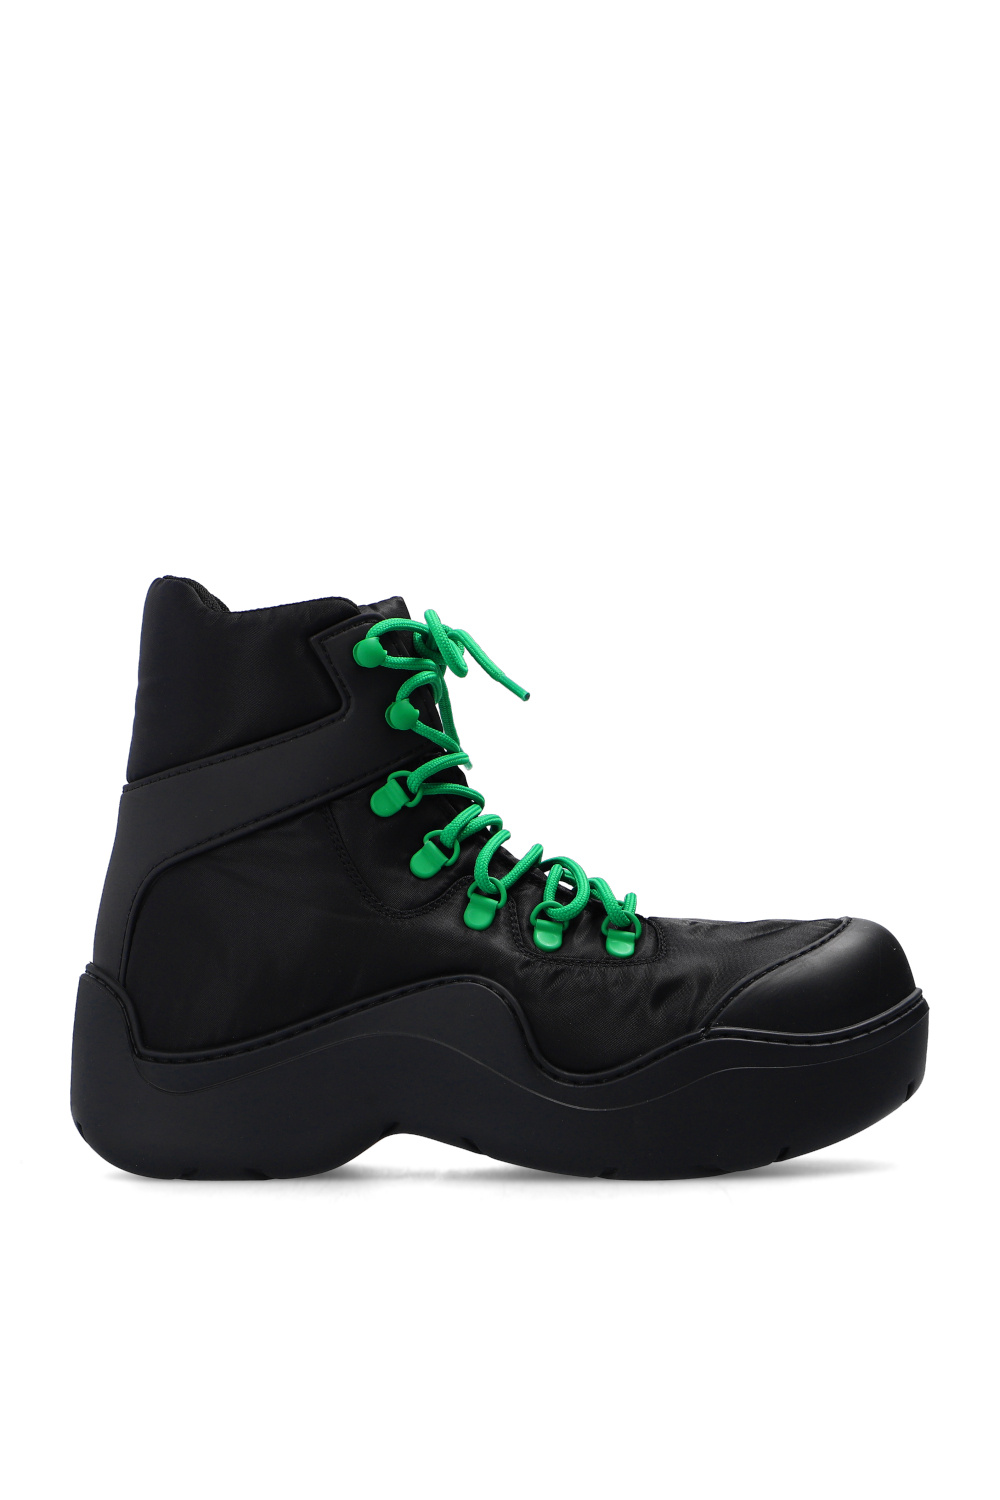 Bottega Veneta ‘Puddle Bomber’ high-top boots